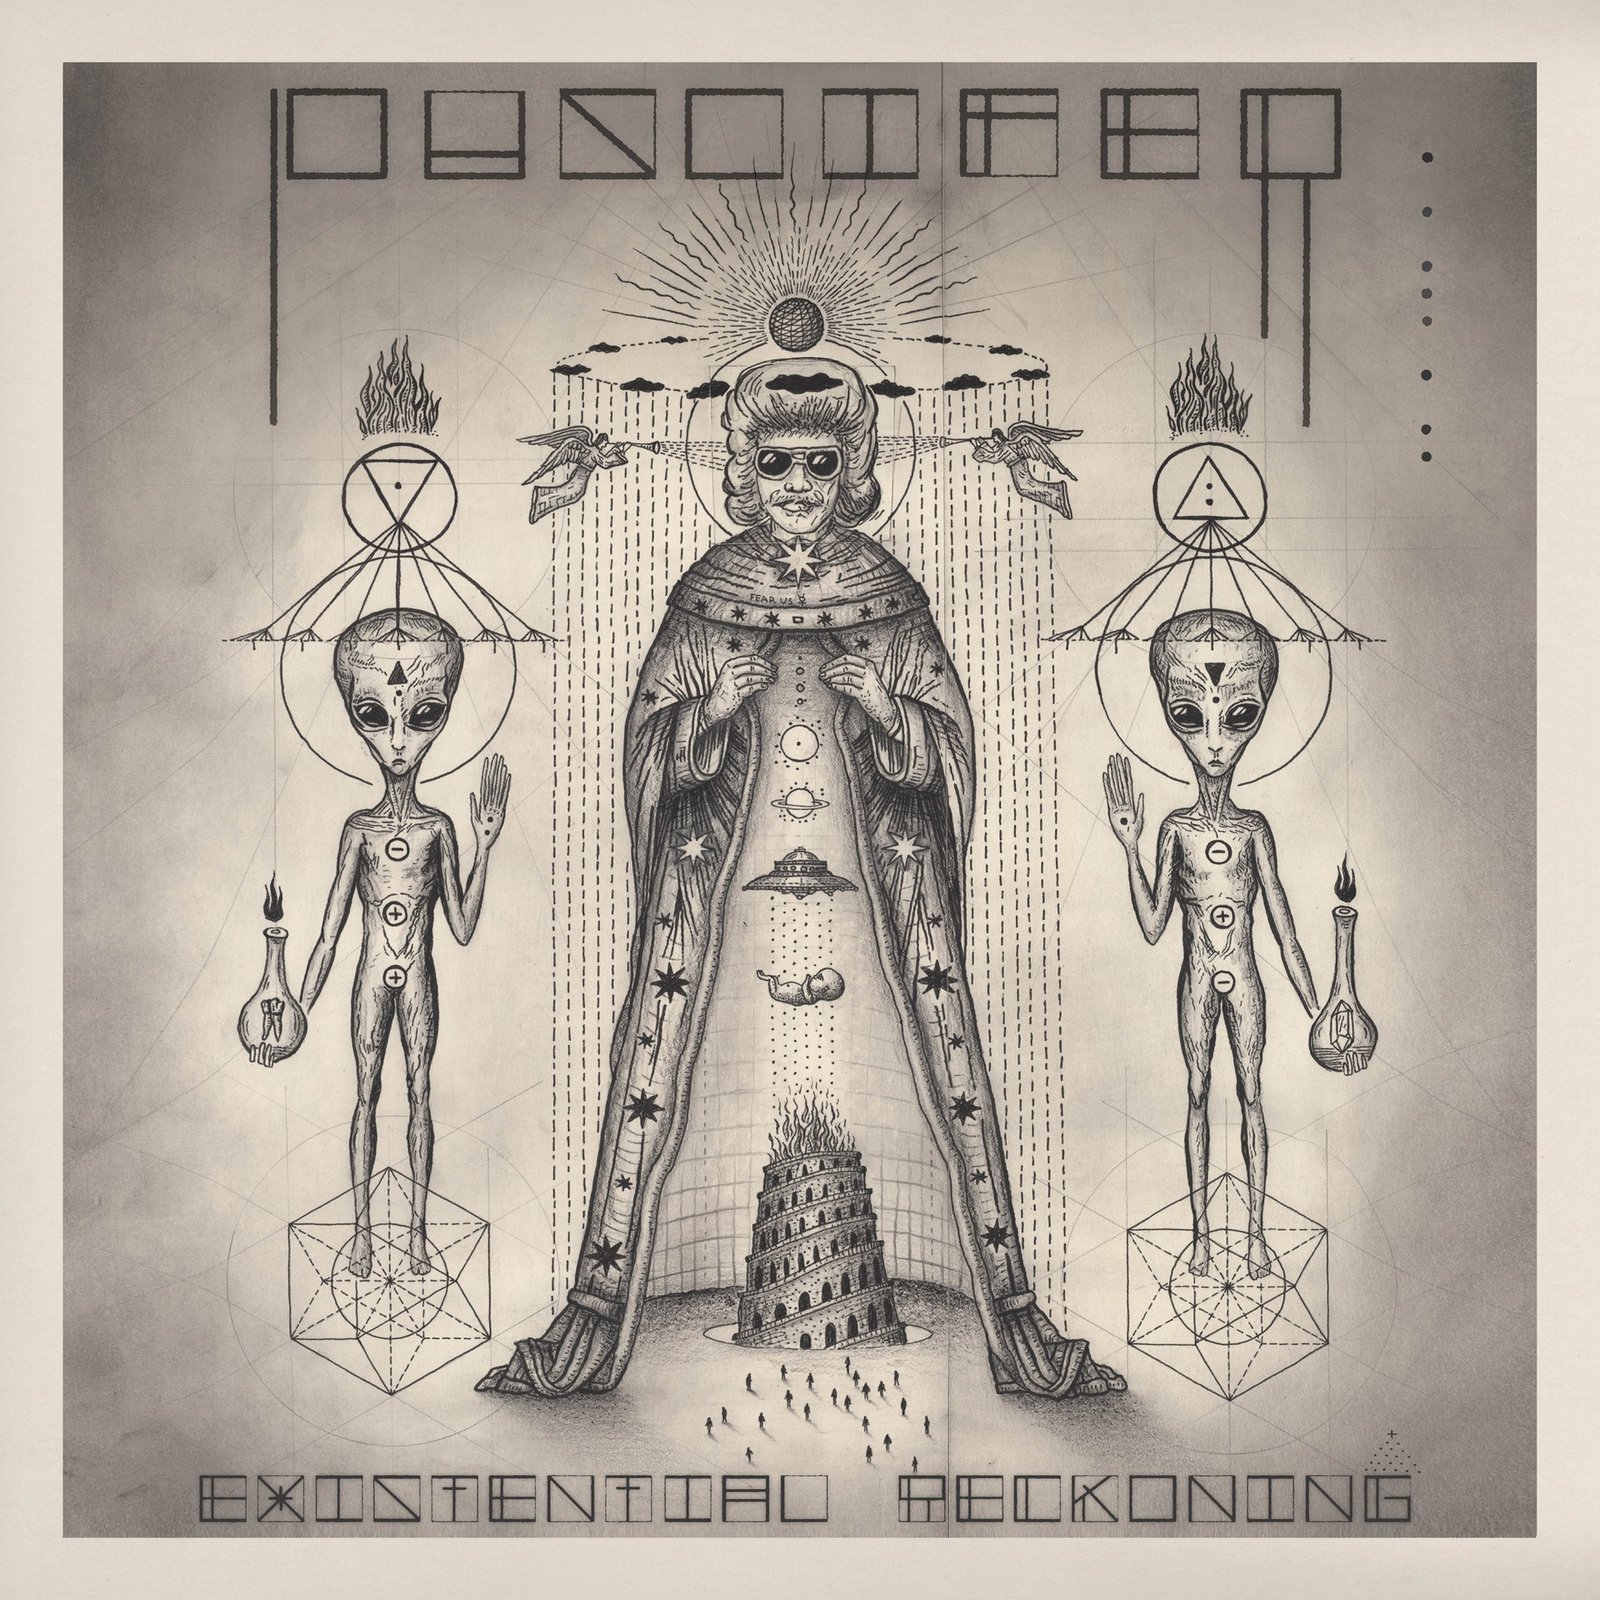 Puscifer - 'Existential Reckoning' Summa Inferno | Metal + Rock & Alternative Music